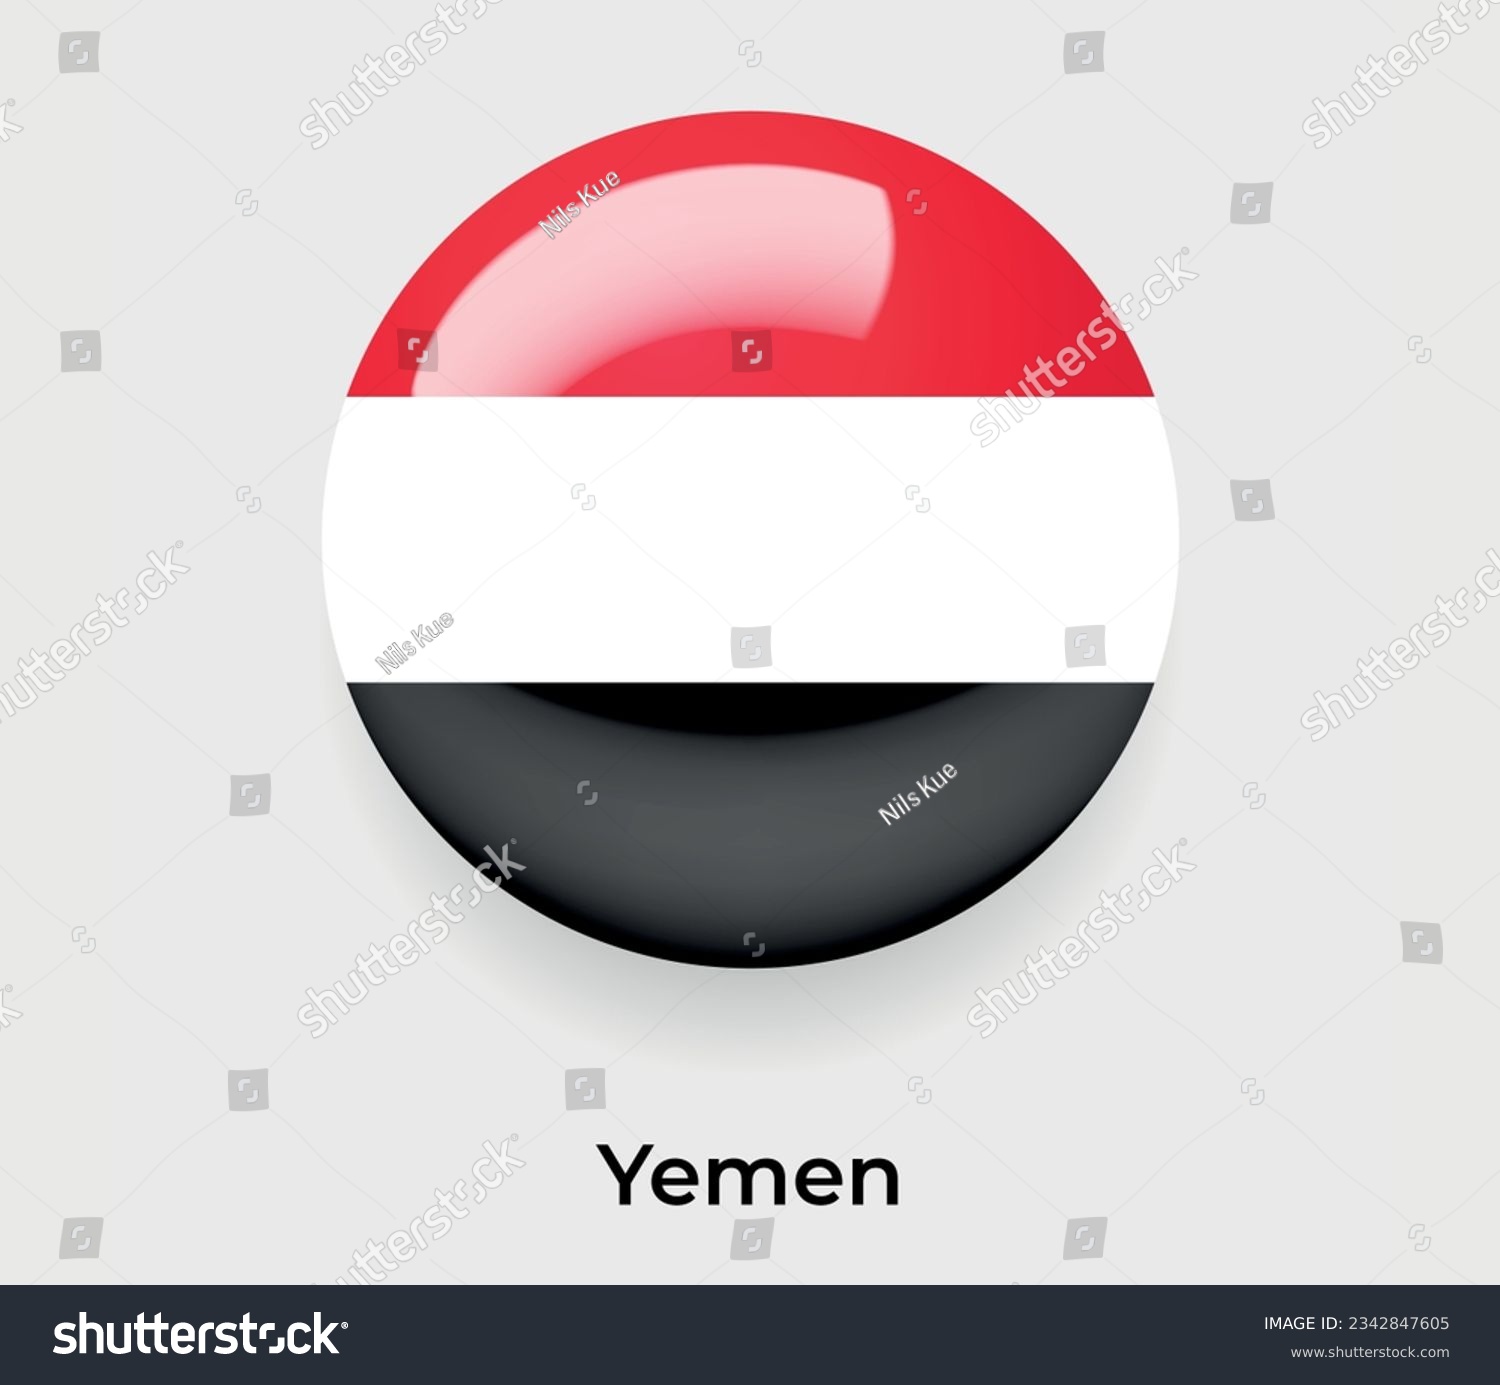 Yemenã over royalty